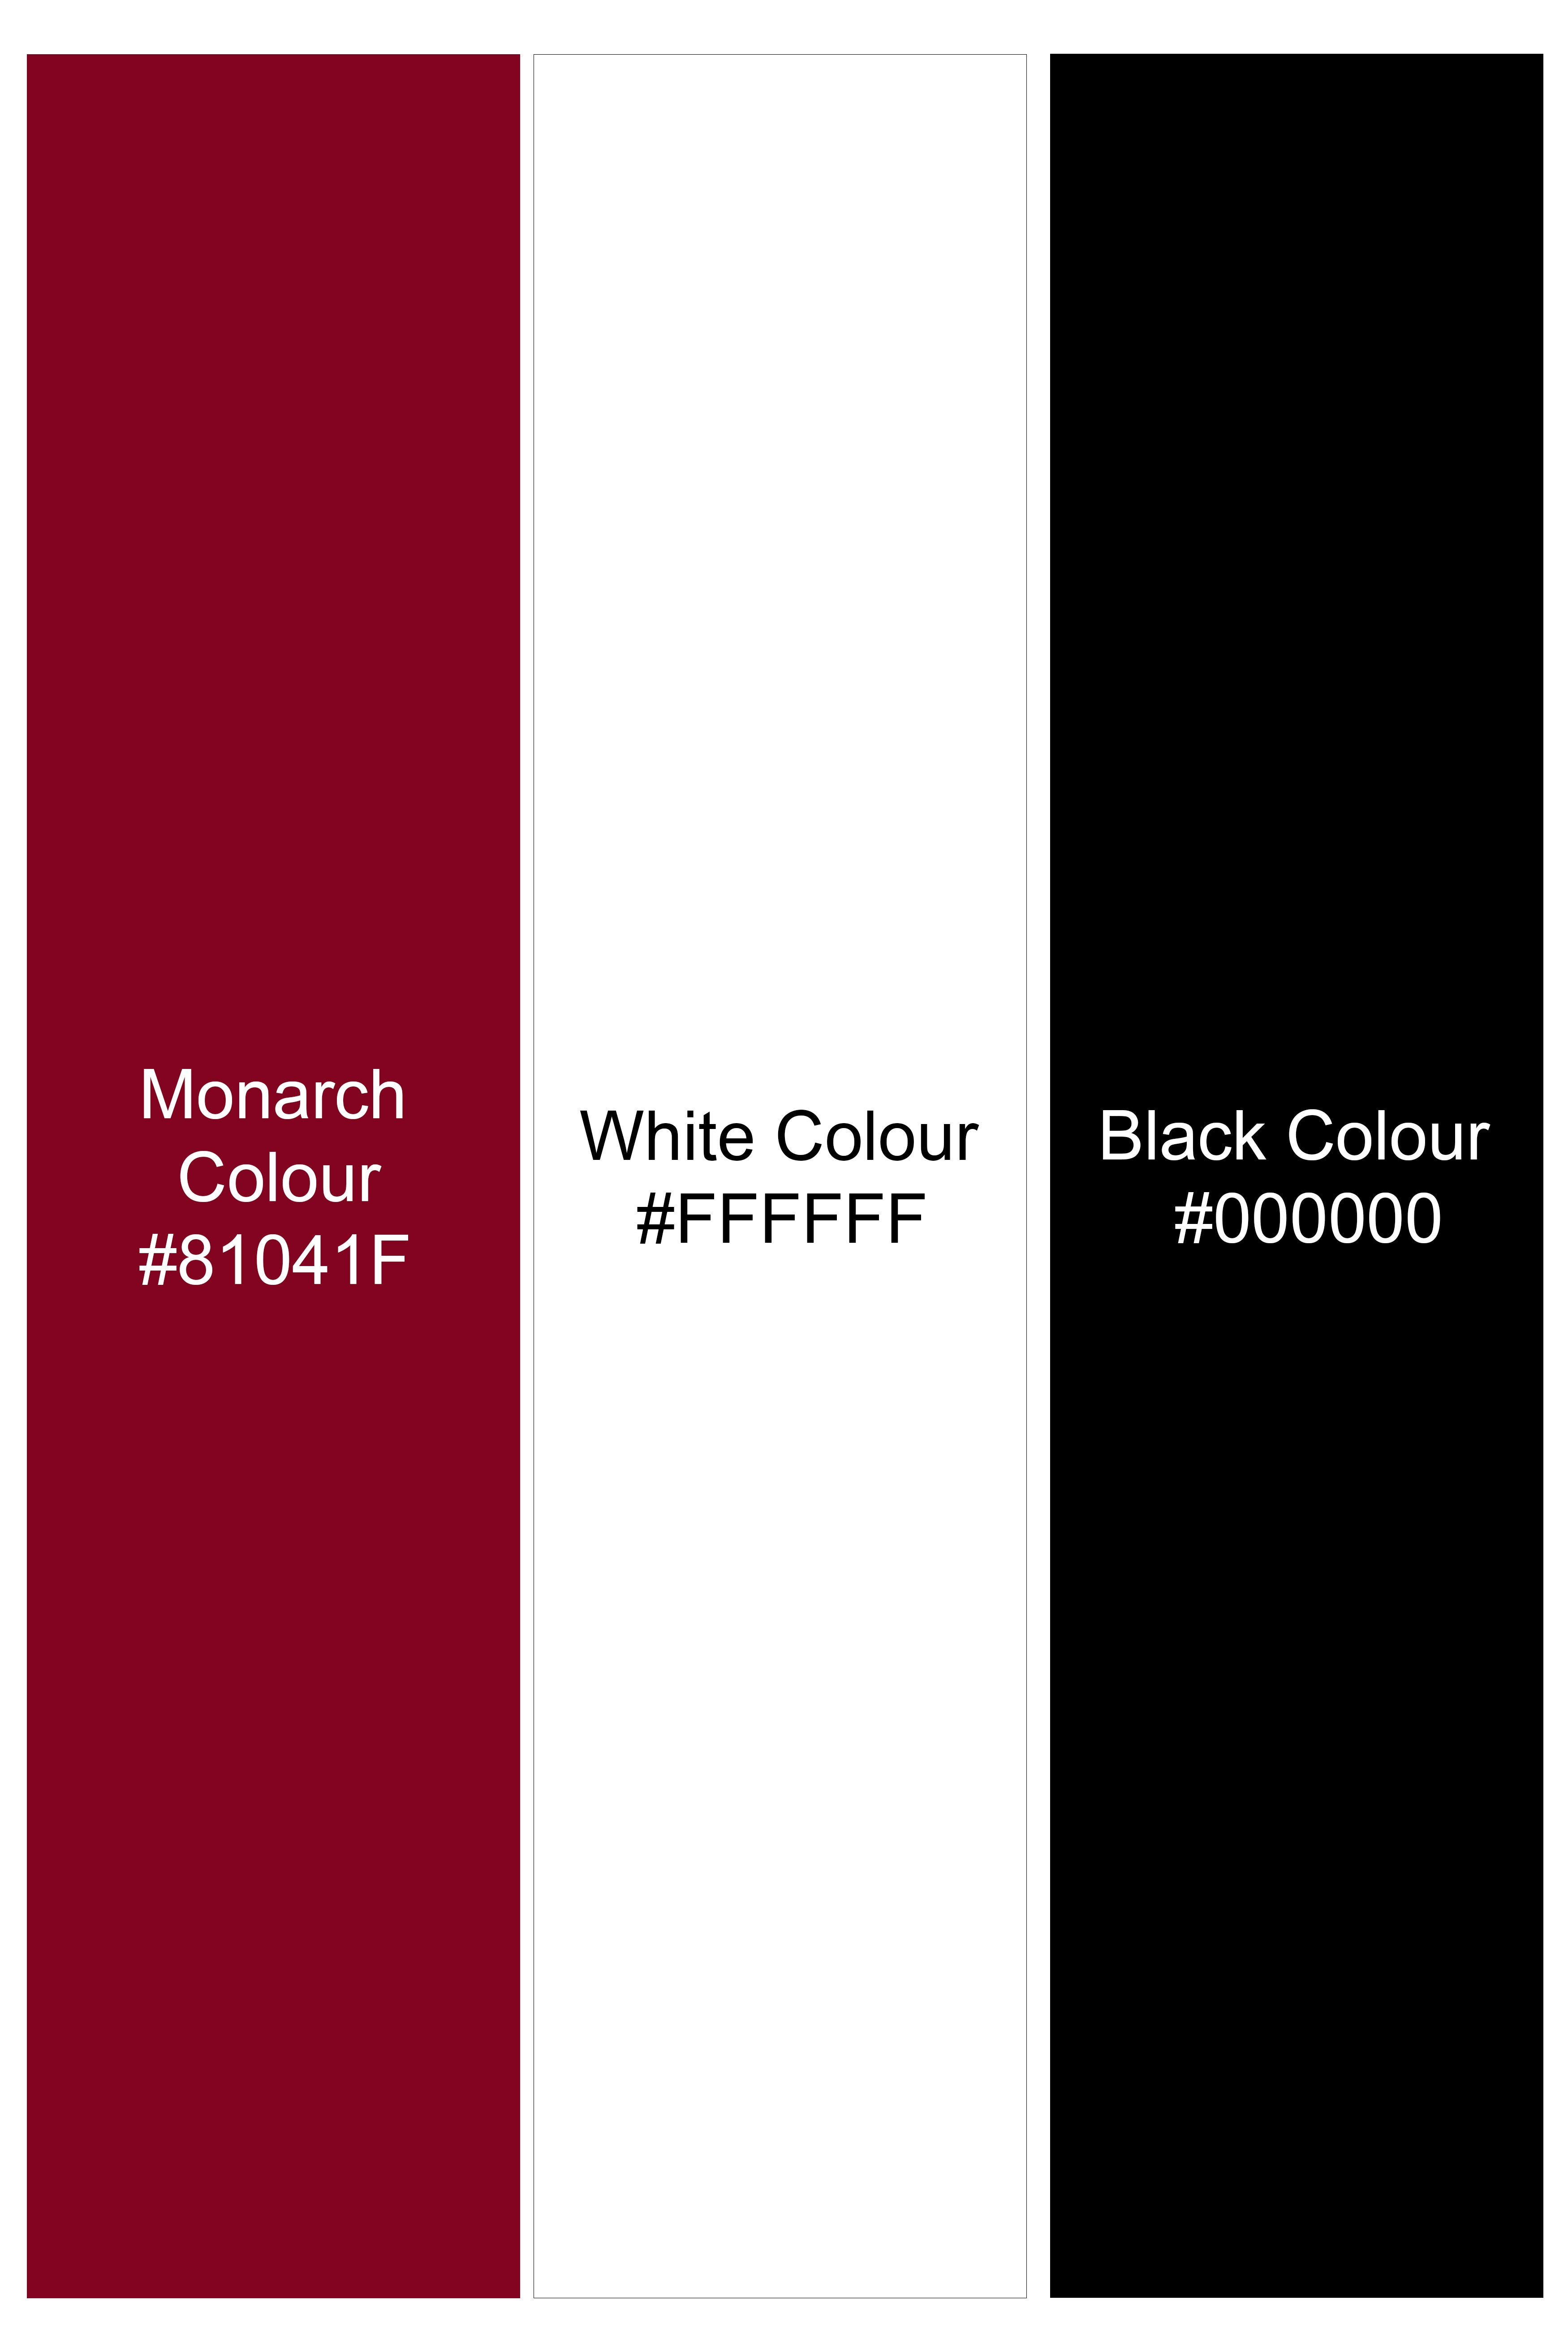 Jade Black with Monarch Red and White Premium Cotton Flat Knit Polo TS937-S, TS937-M, TS937-L, TS937-XL, TS937-XXL